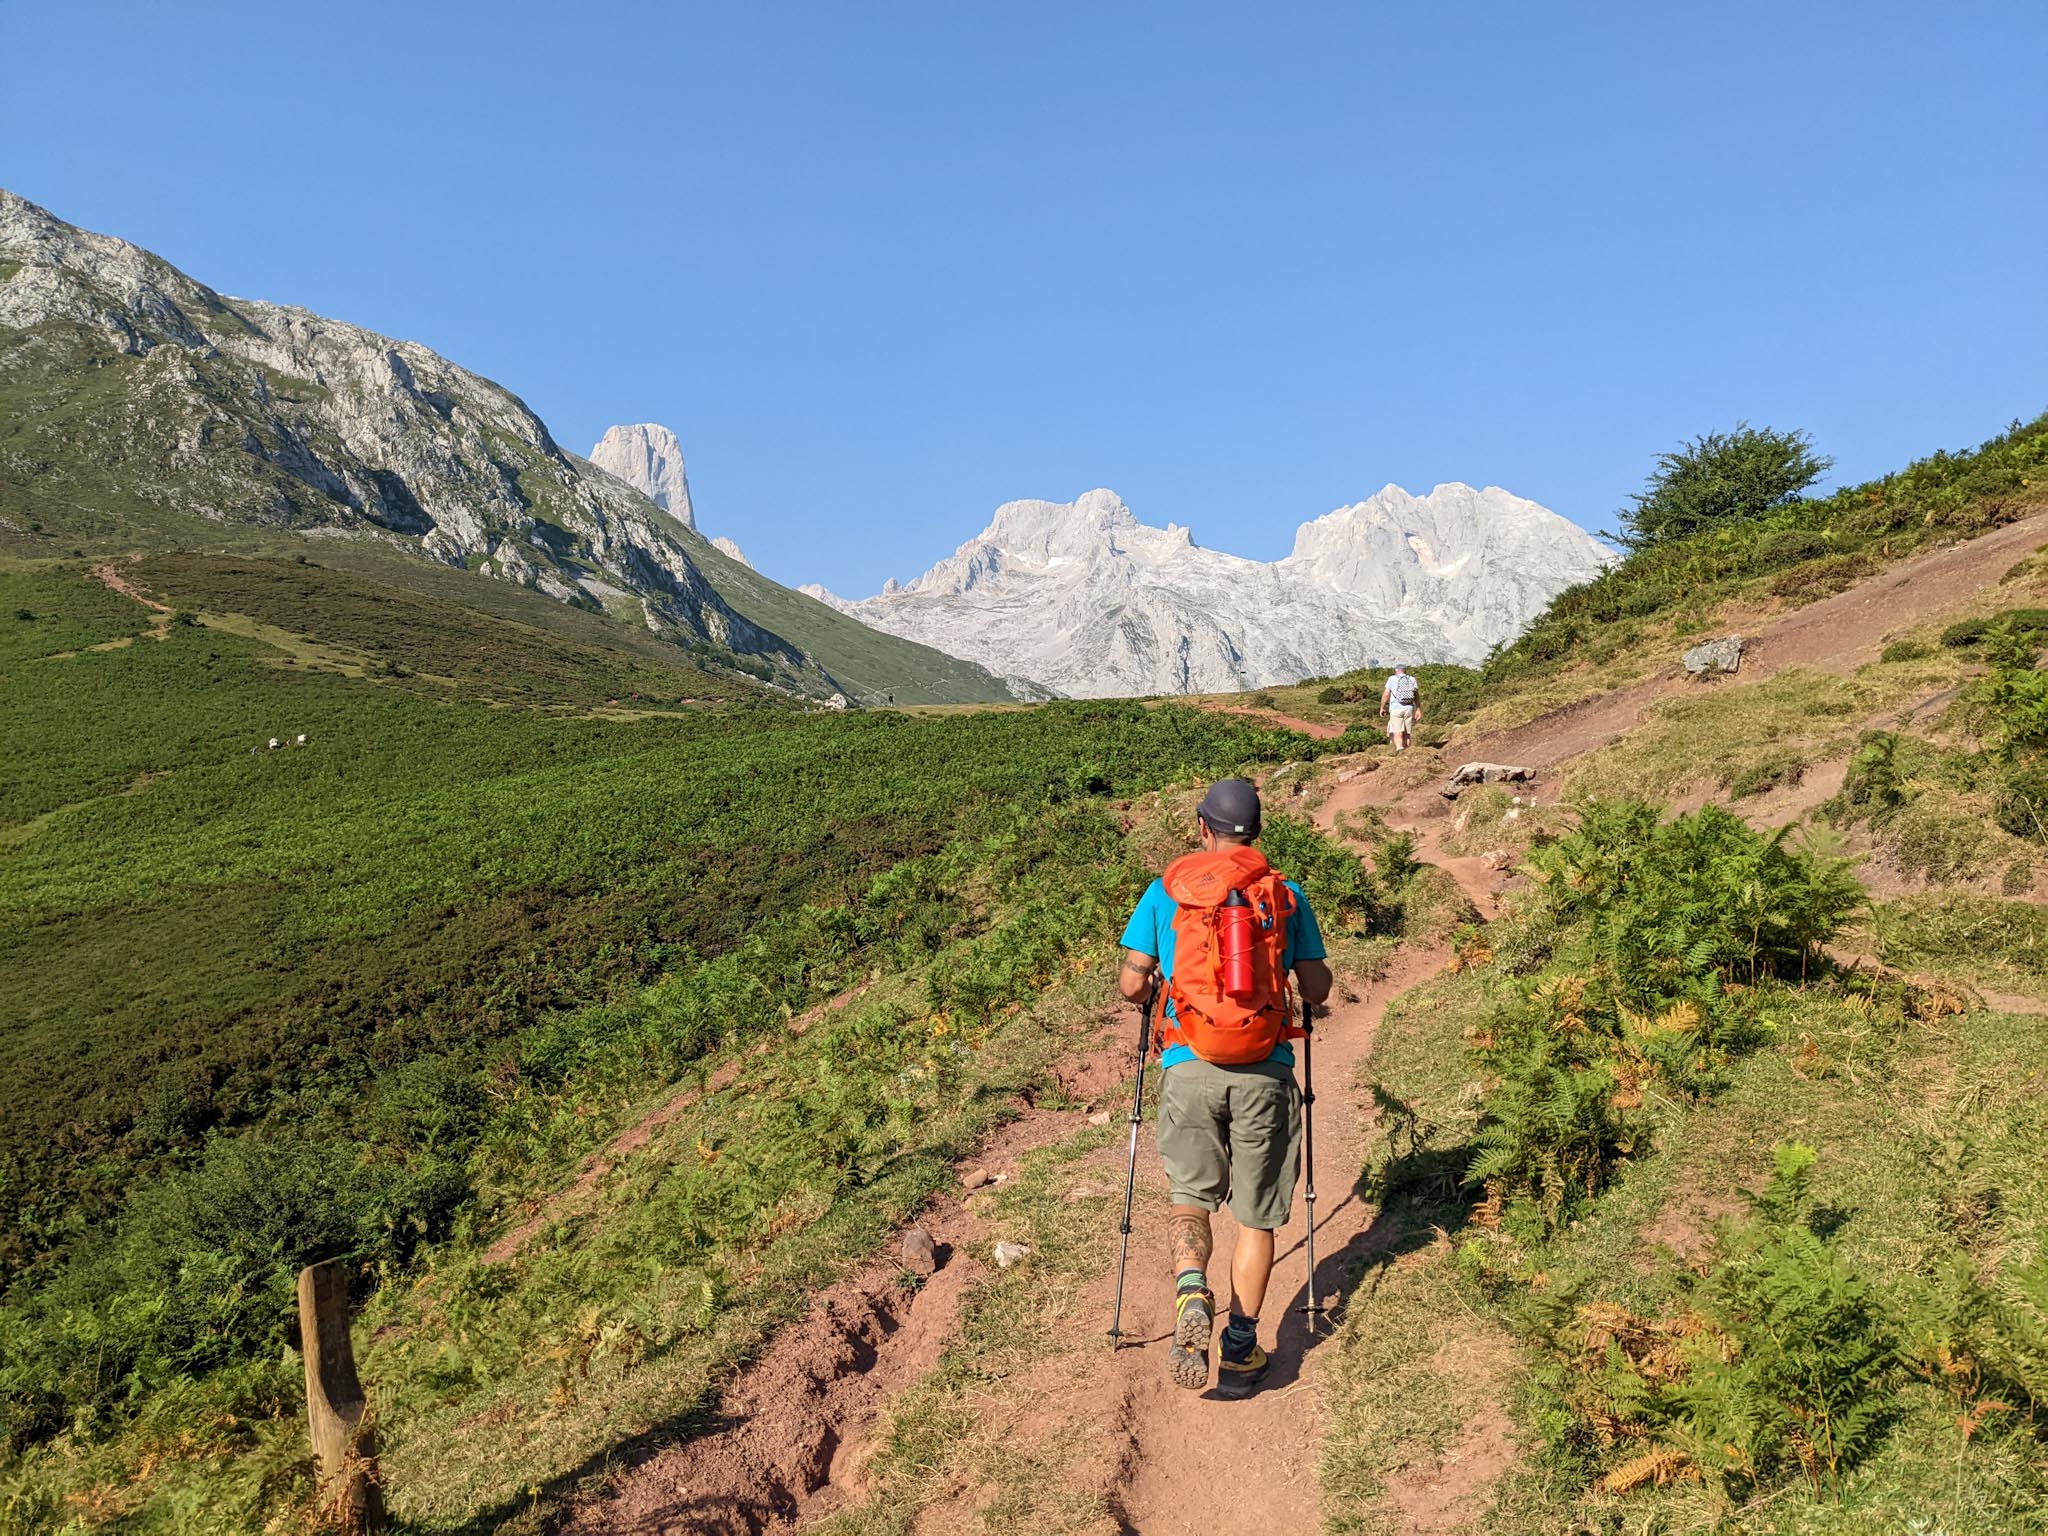 Marcos hiking with trekking poles towards rocky peaks in Picos de Europa, Asturias.